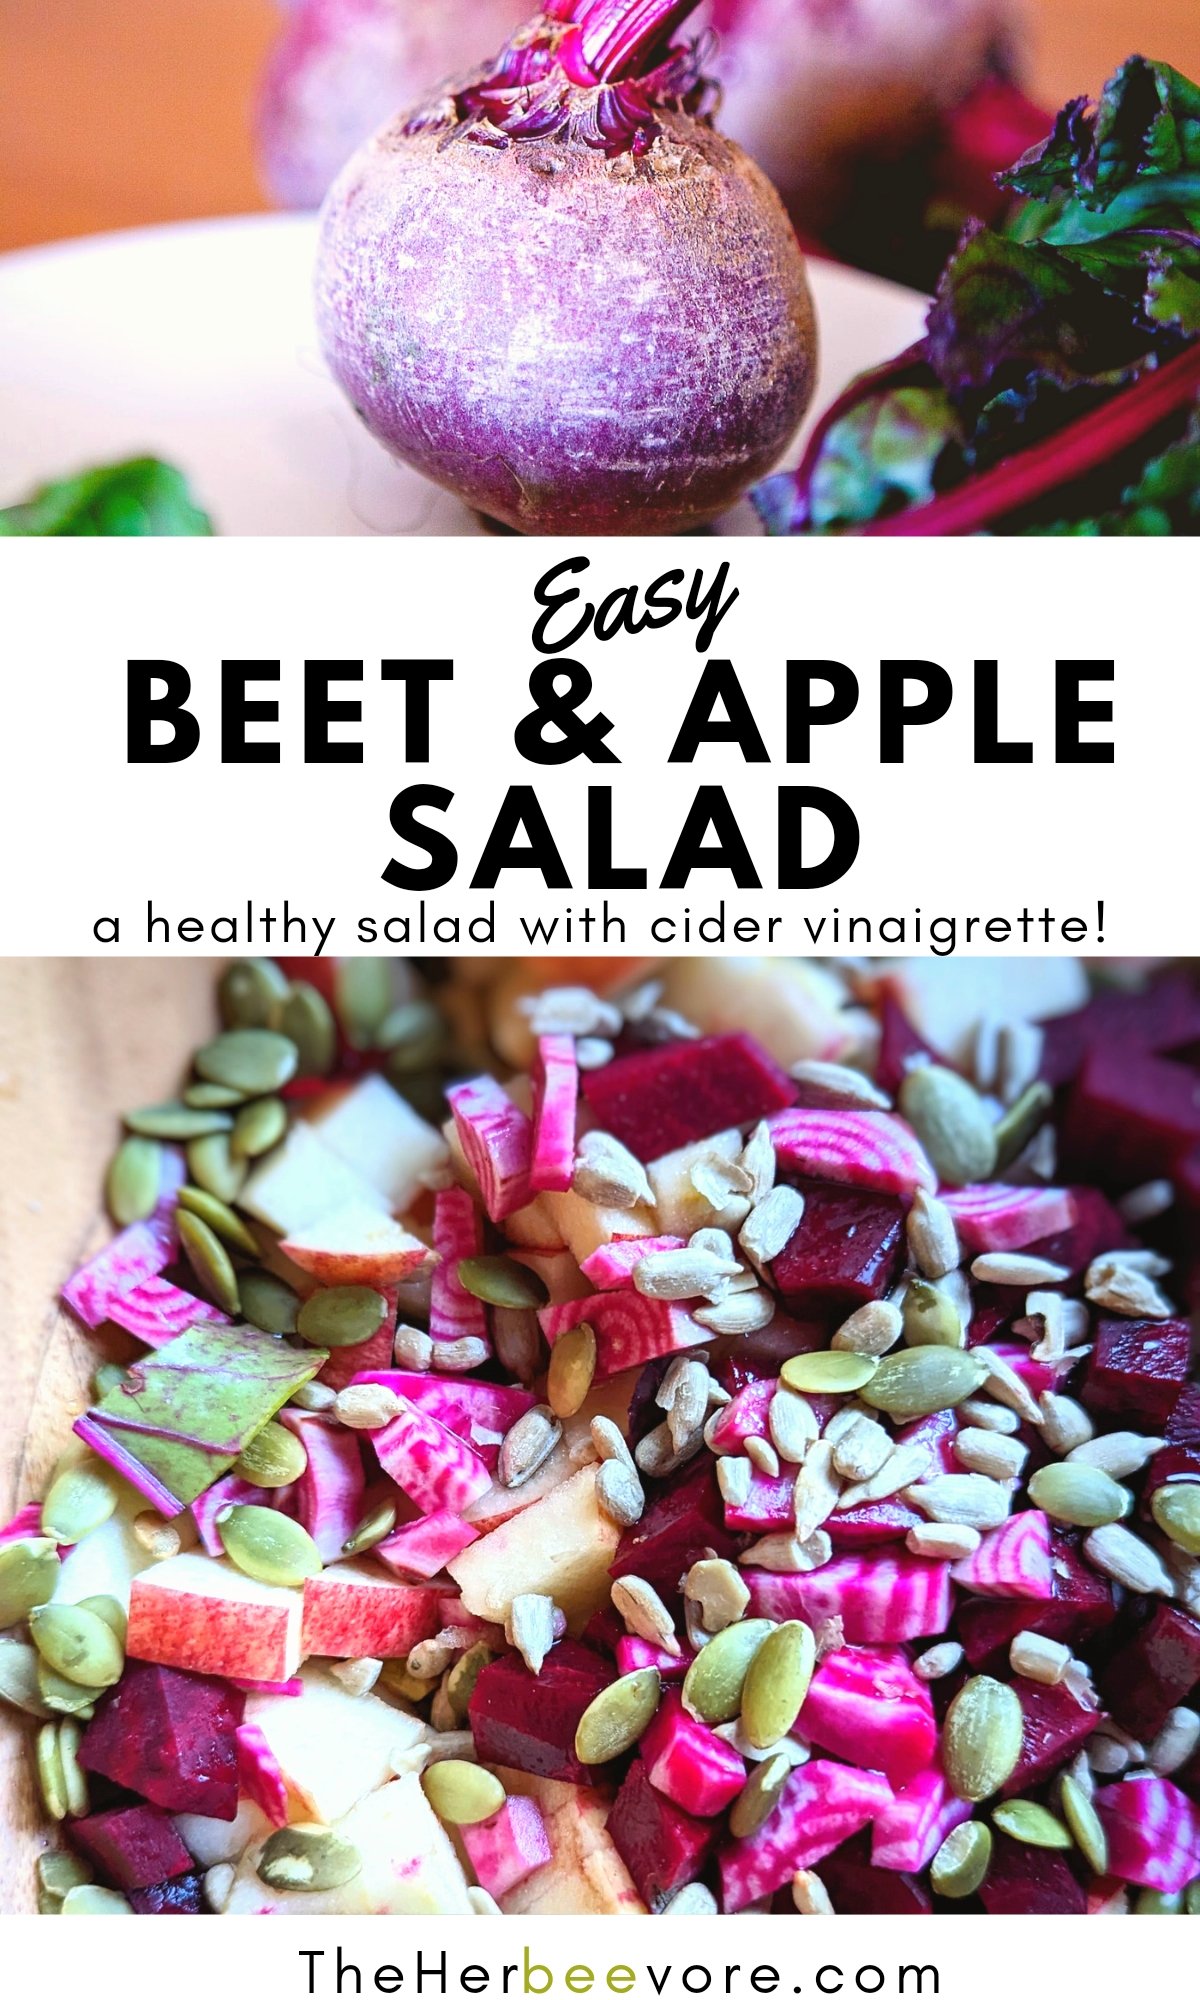 beet and apple salad recipe with apple cider vinegar dressing healthy vegetarian veganuary winter salads recipes for raw vegan filling healthy beet apple